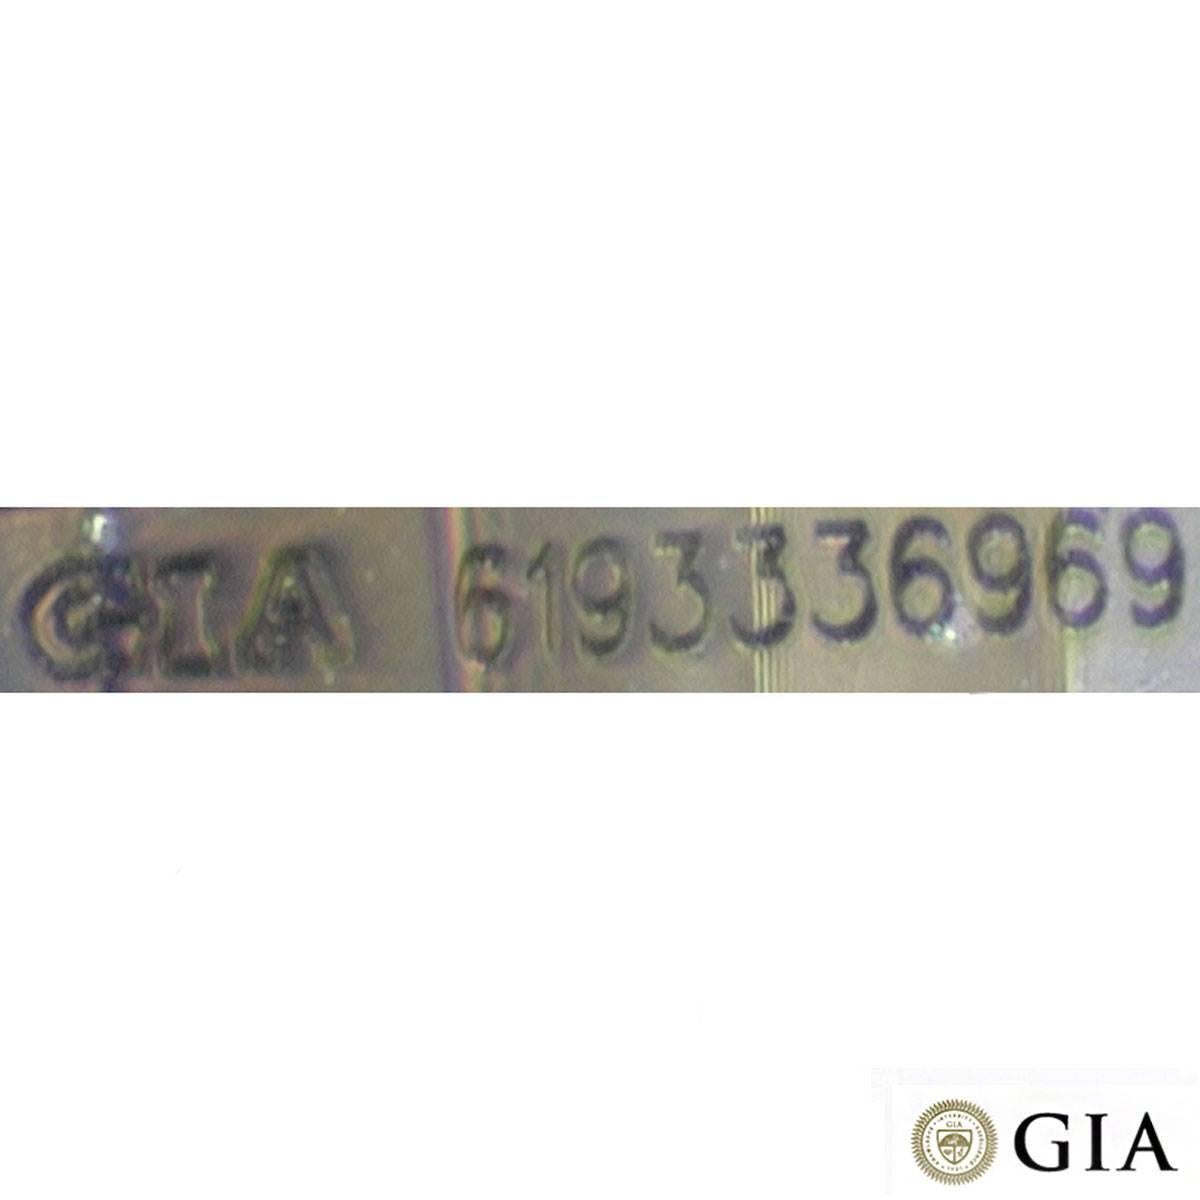 Women's GIA Certified Round Brilliant Cut Diamond Ring 1.55 Carat D Colour